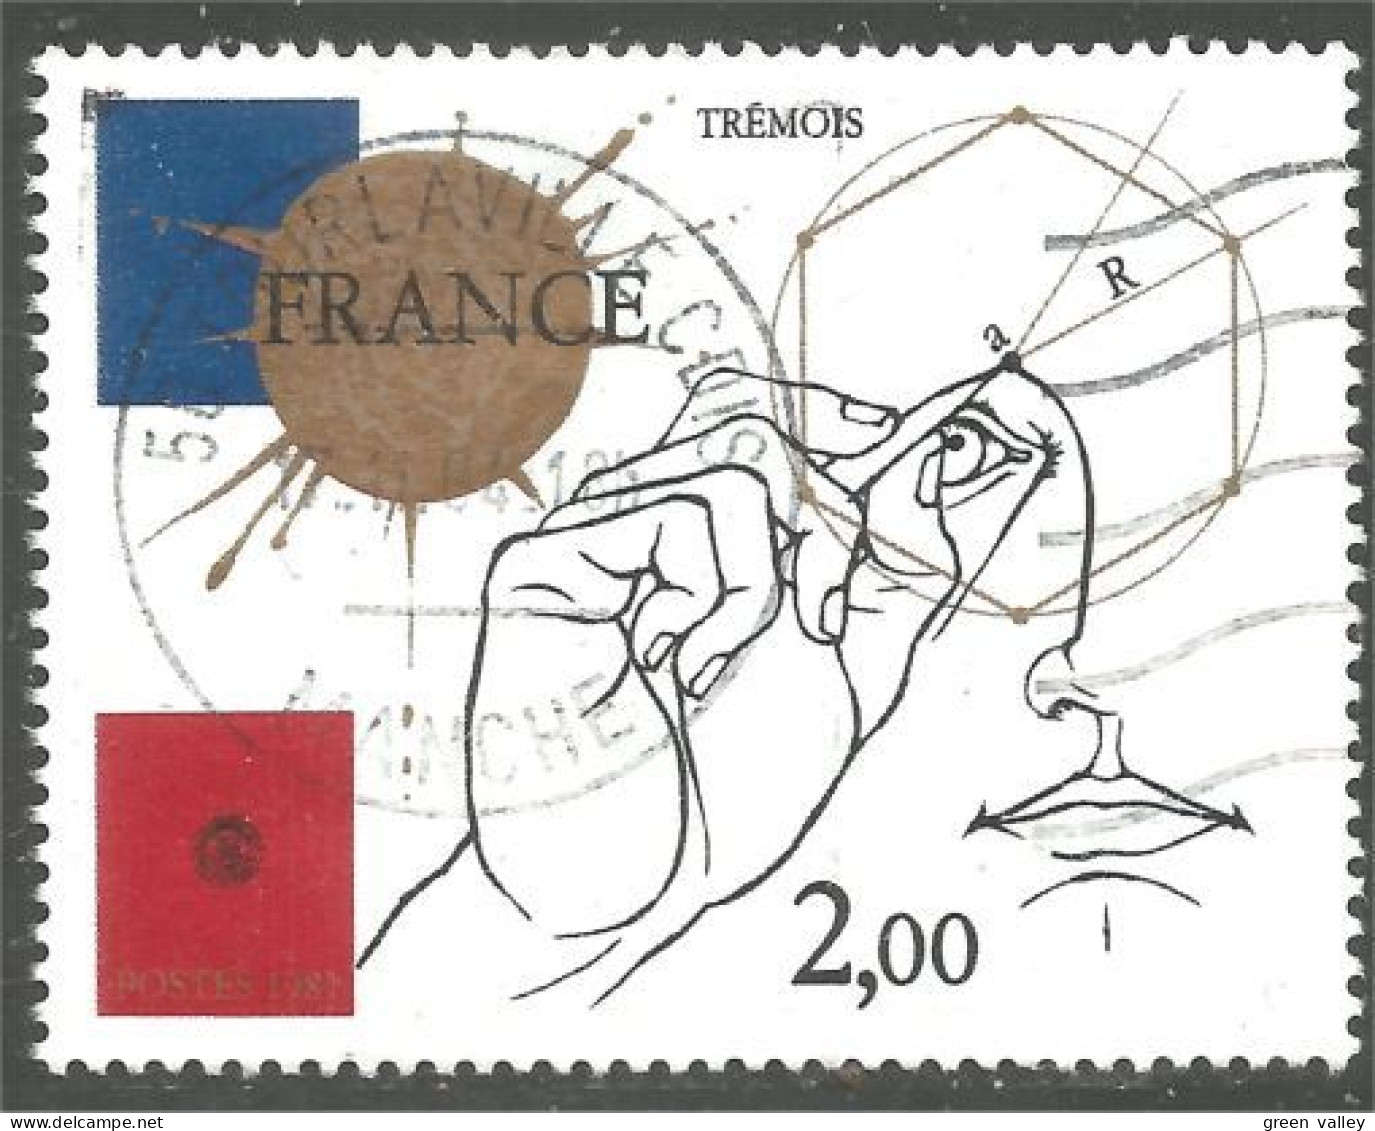 331nf-46 France Gravure Trémois Engraving - Used Stamps